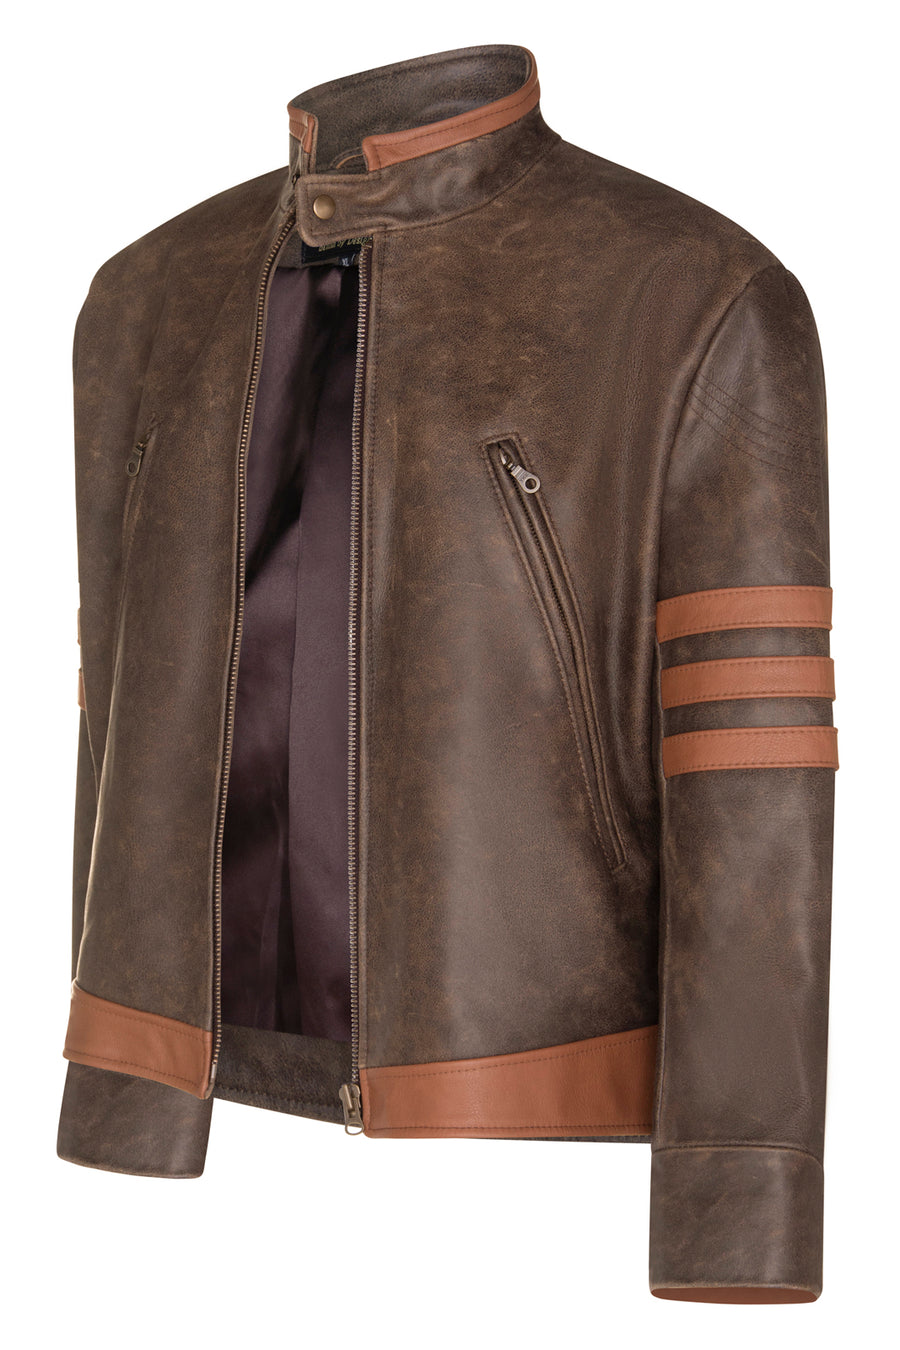 X-Men Wolverine Brown Leather Jacket